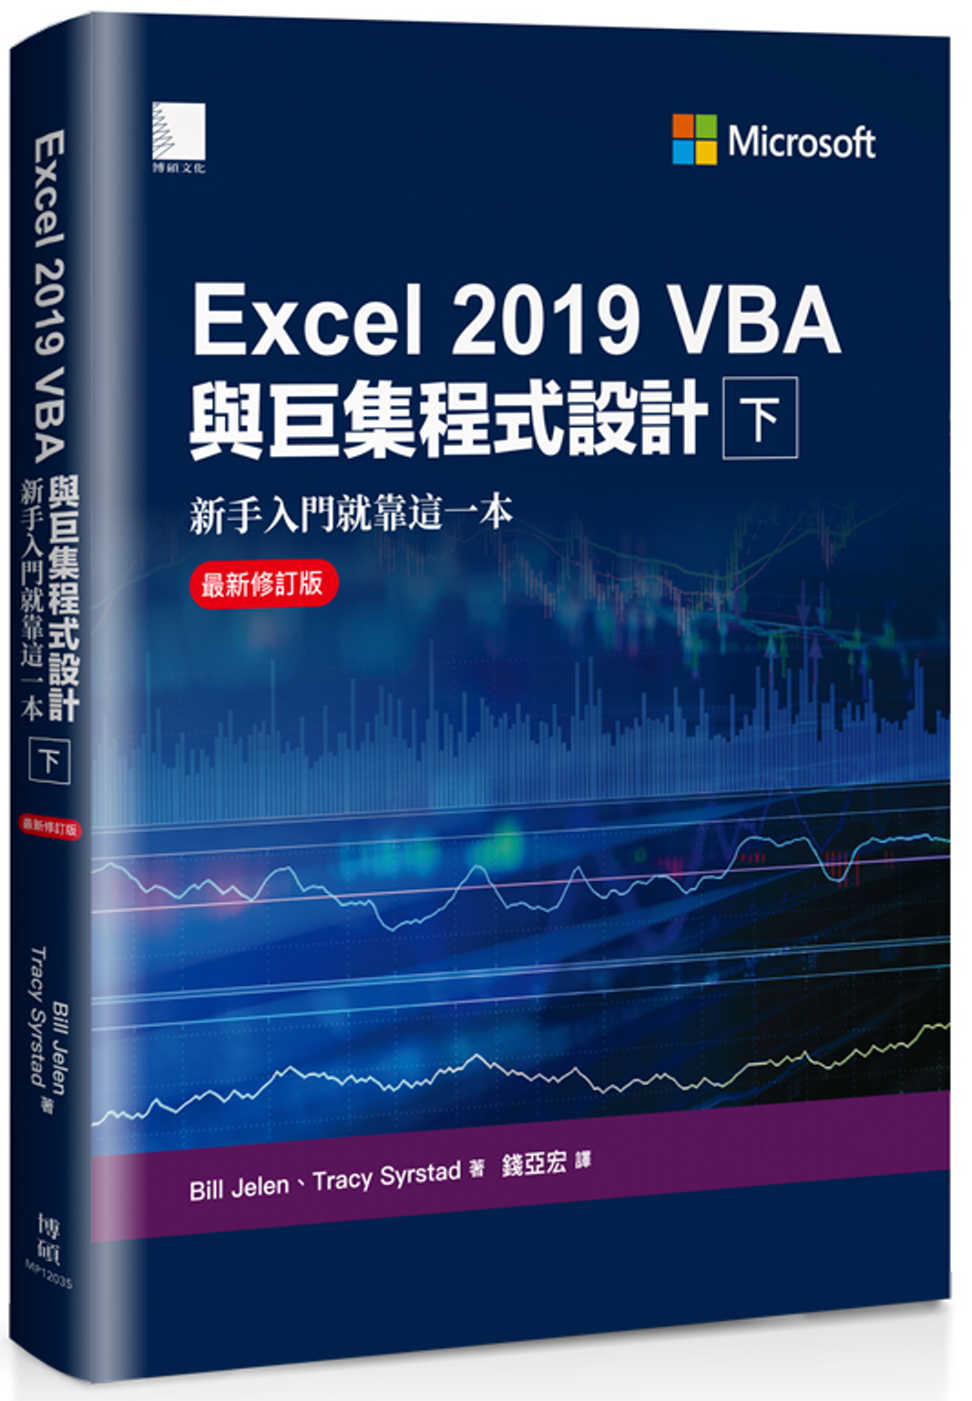 Excel 2019 VBA與巨集程式設計－新手入門就靠這一...